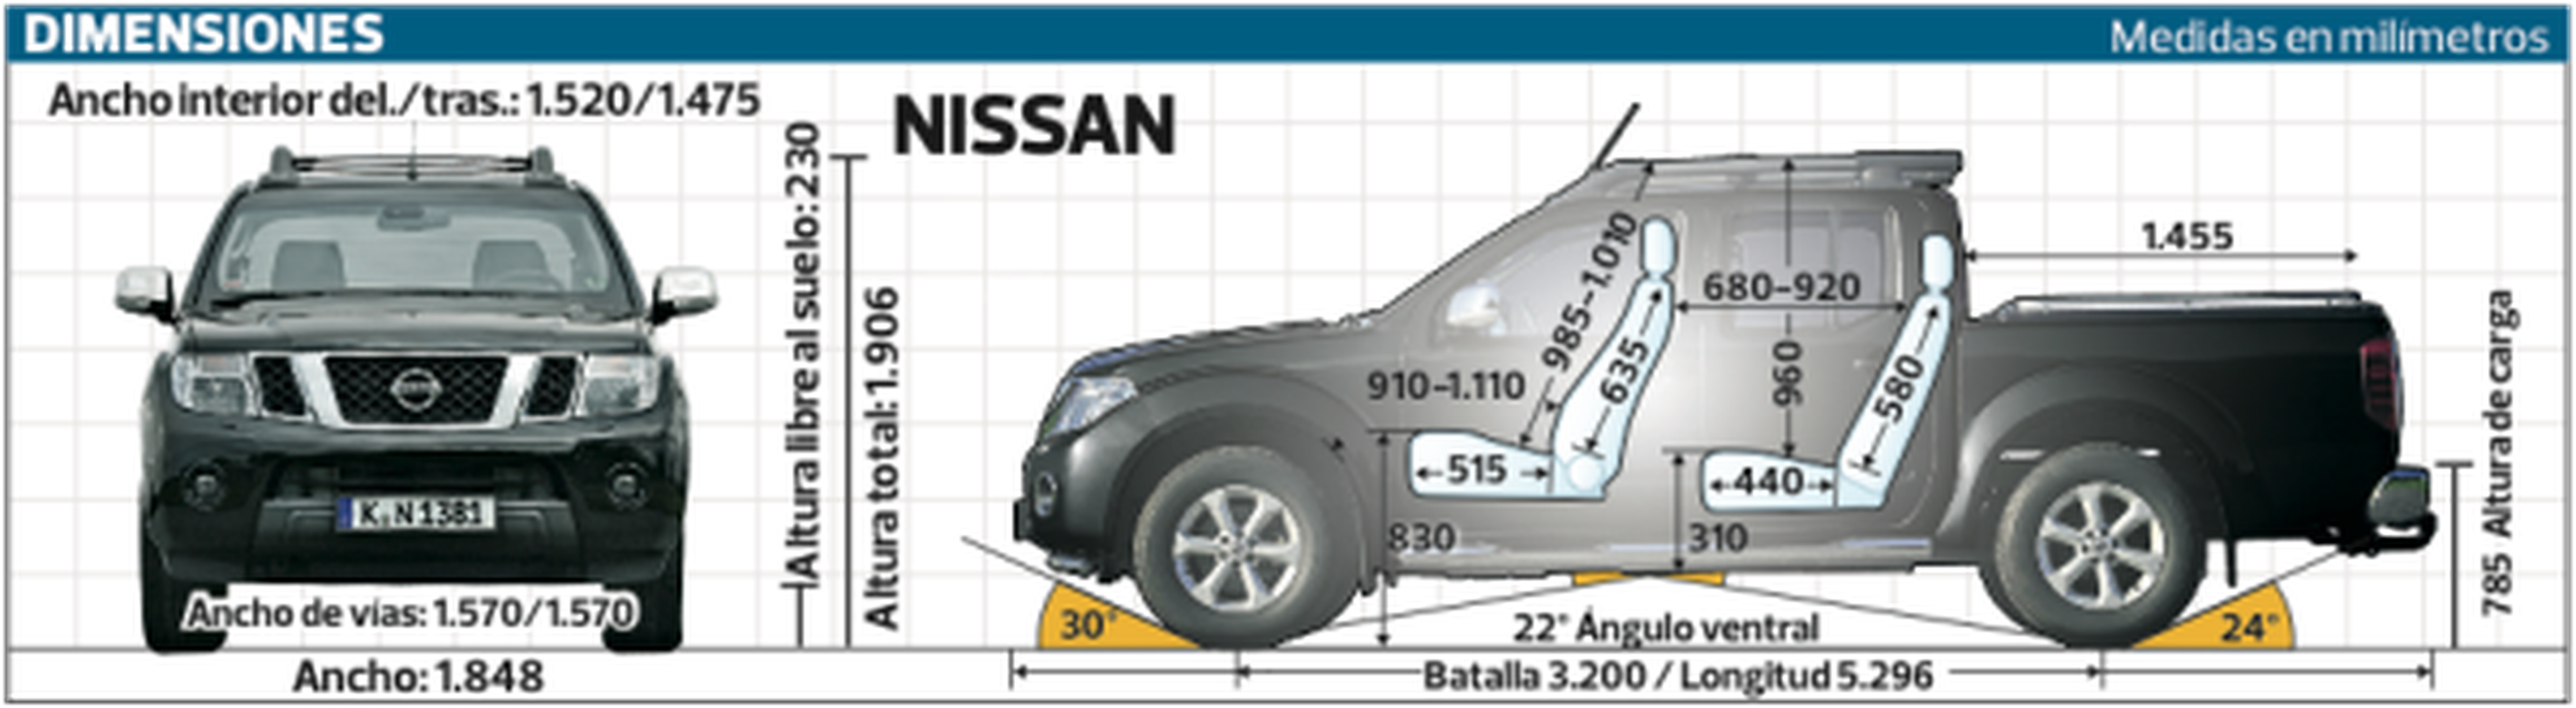 Nissan_Navara_Dimensiones